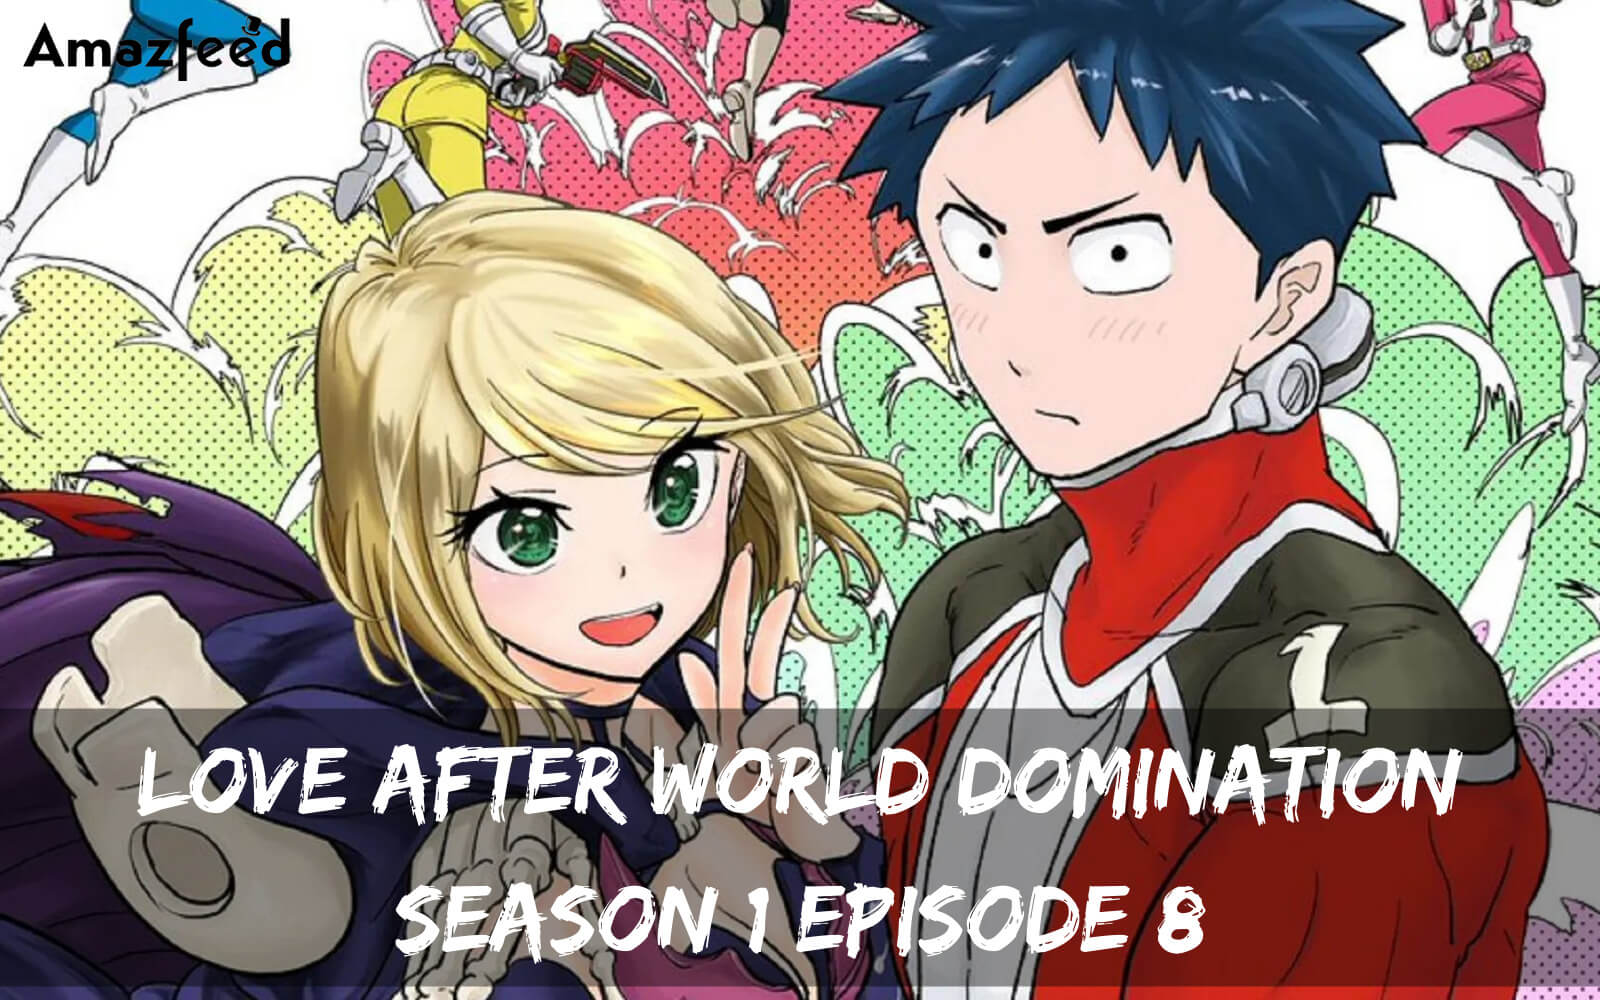 Love After World Domination Season 1 Episode 8 release date